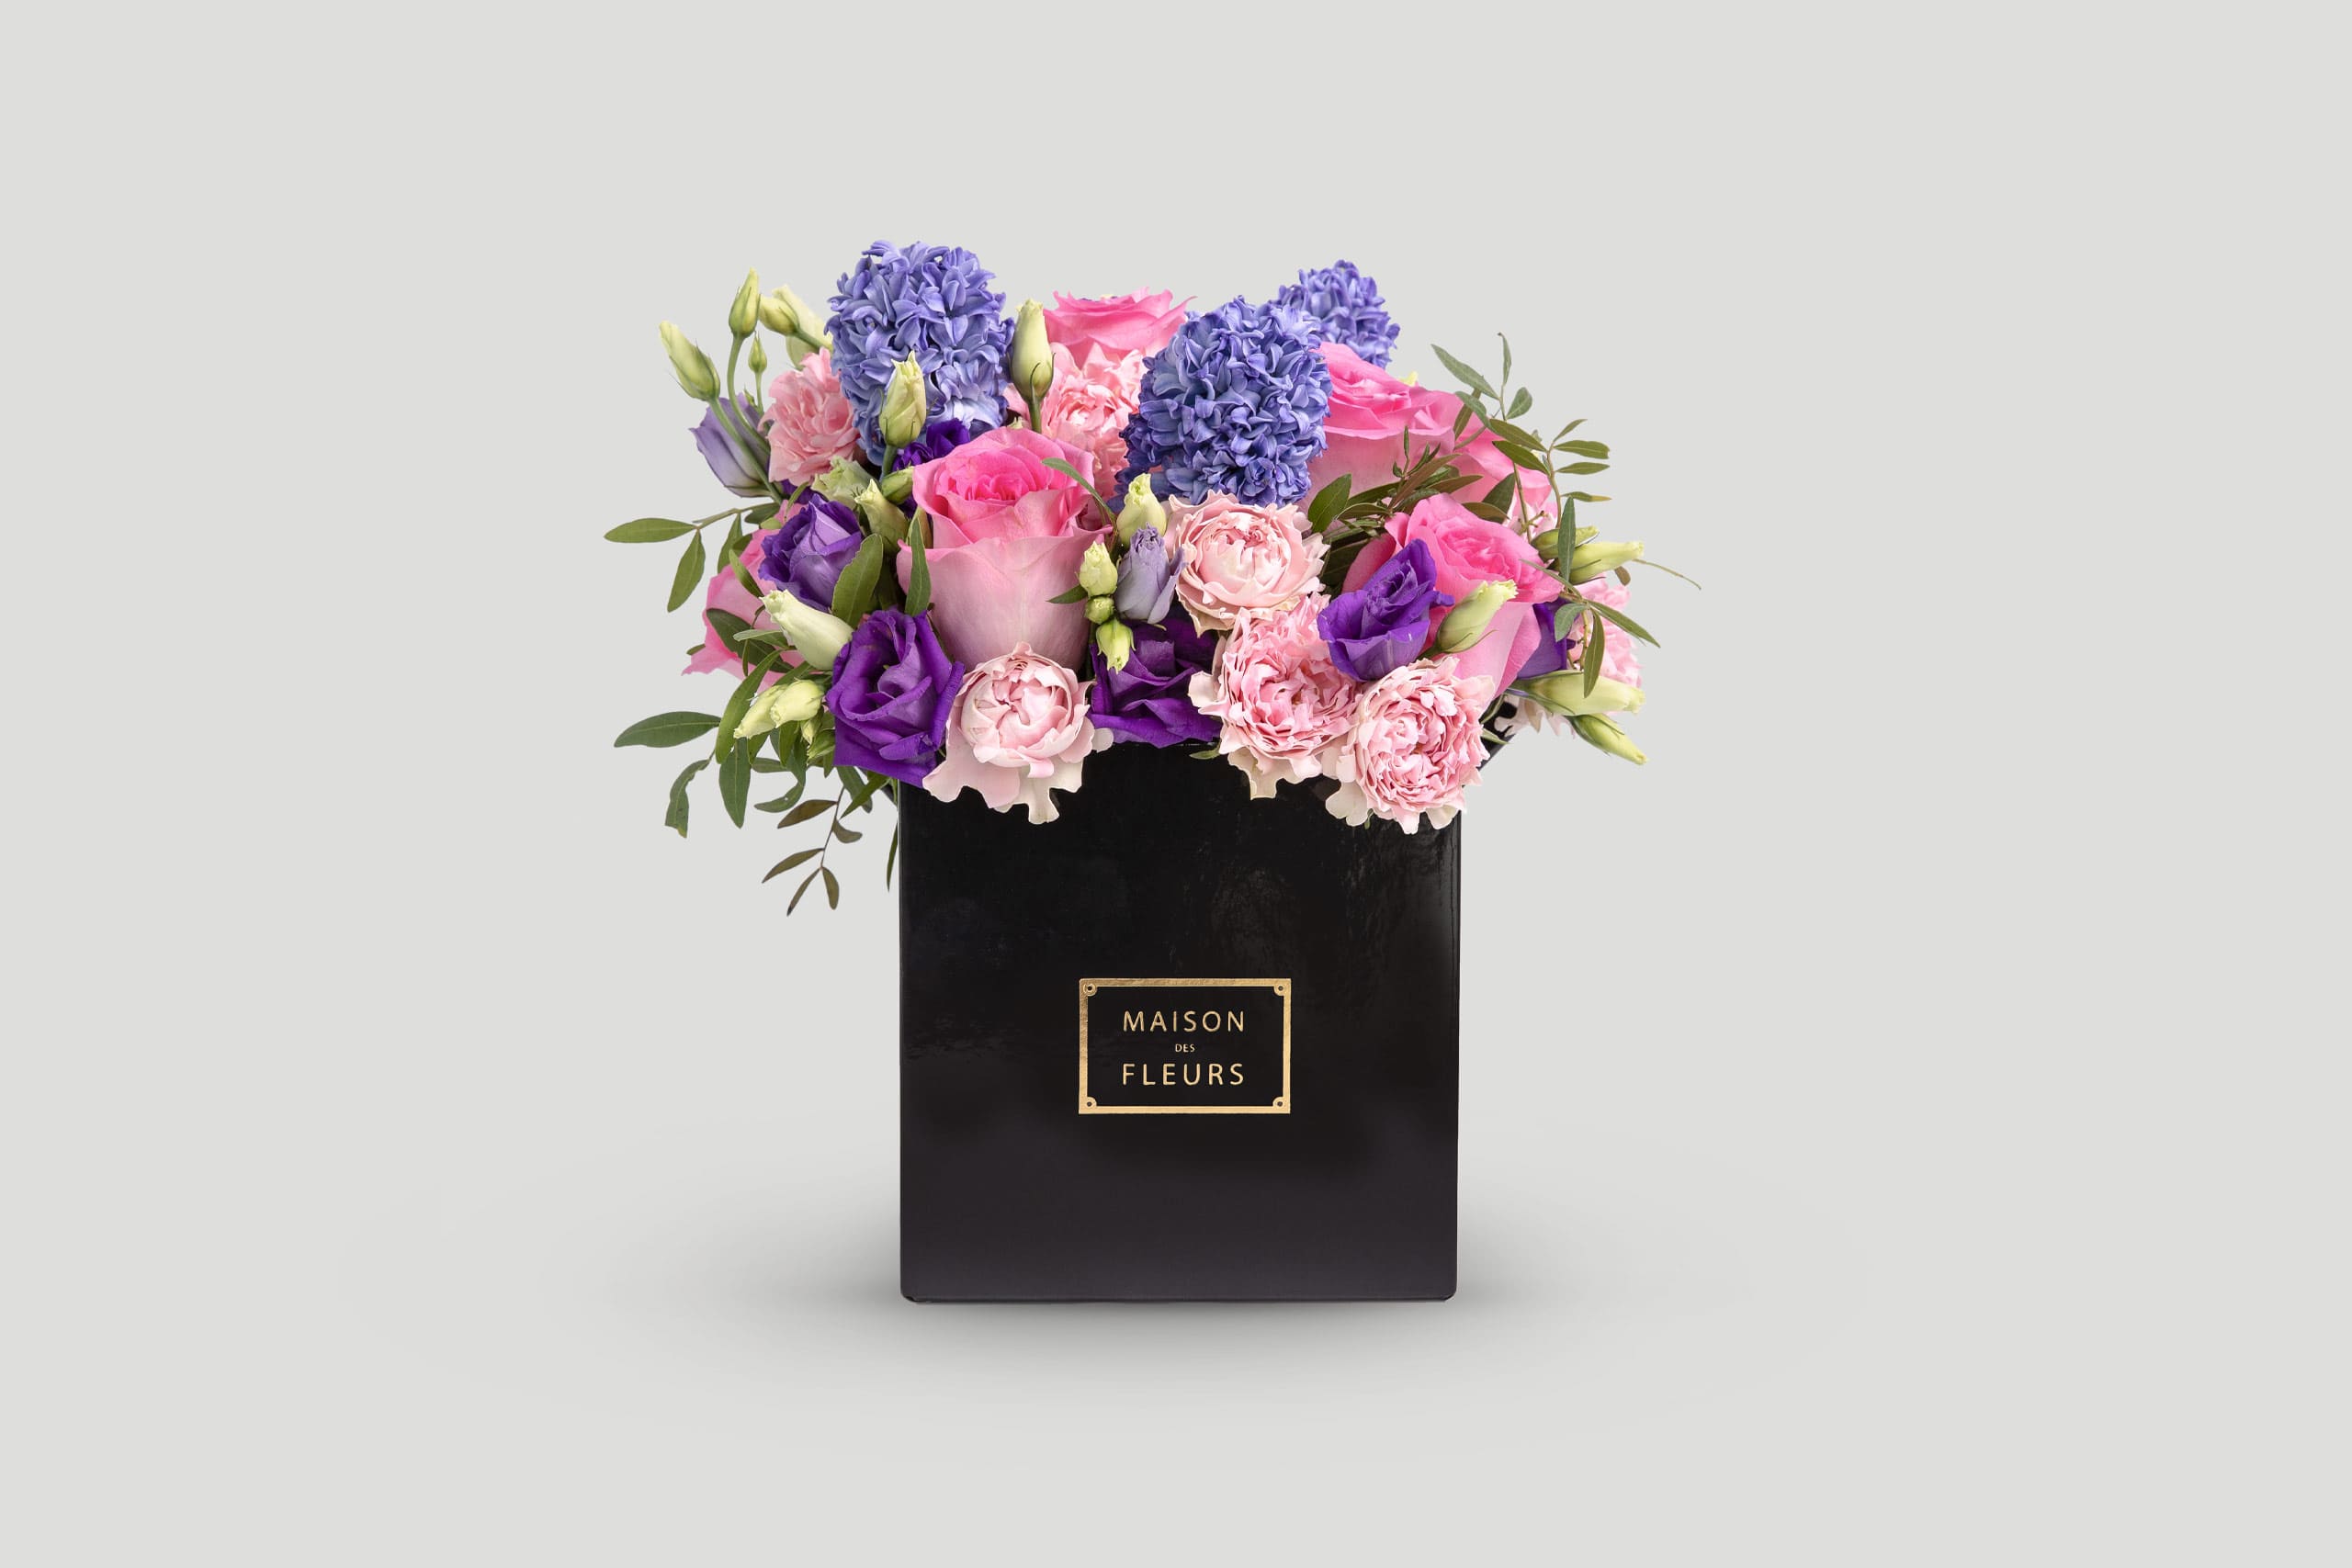 Luxury Flower Arrangement in a Black Box